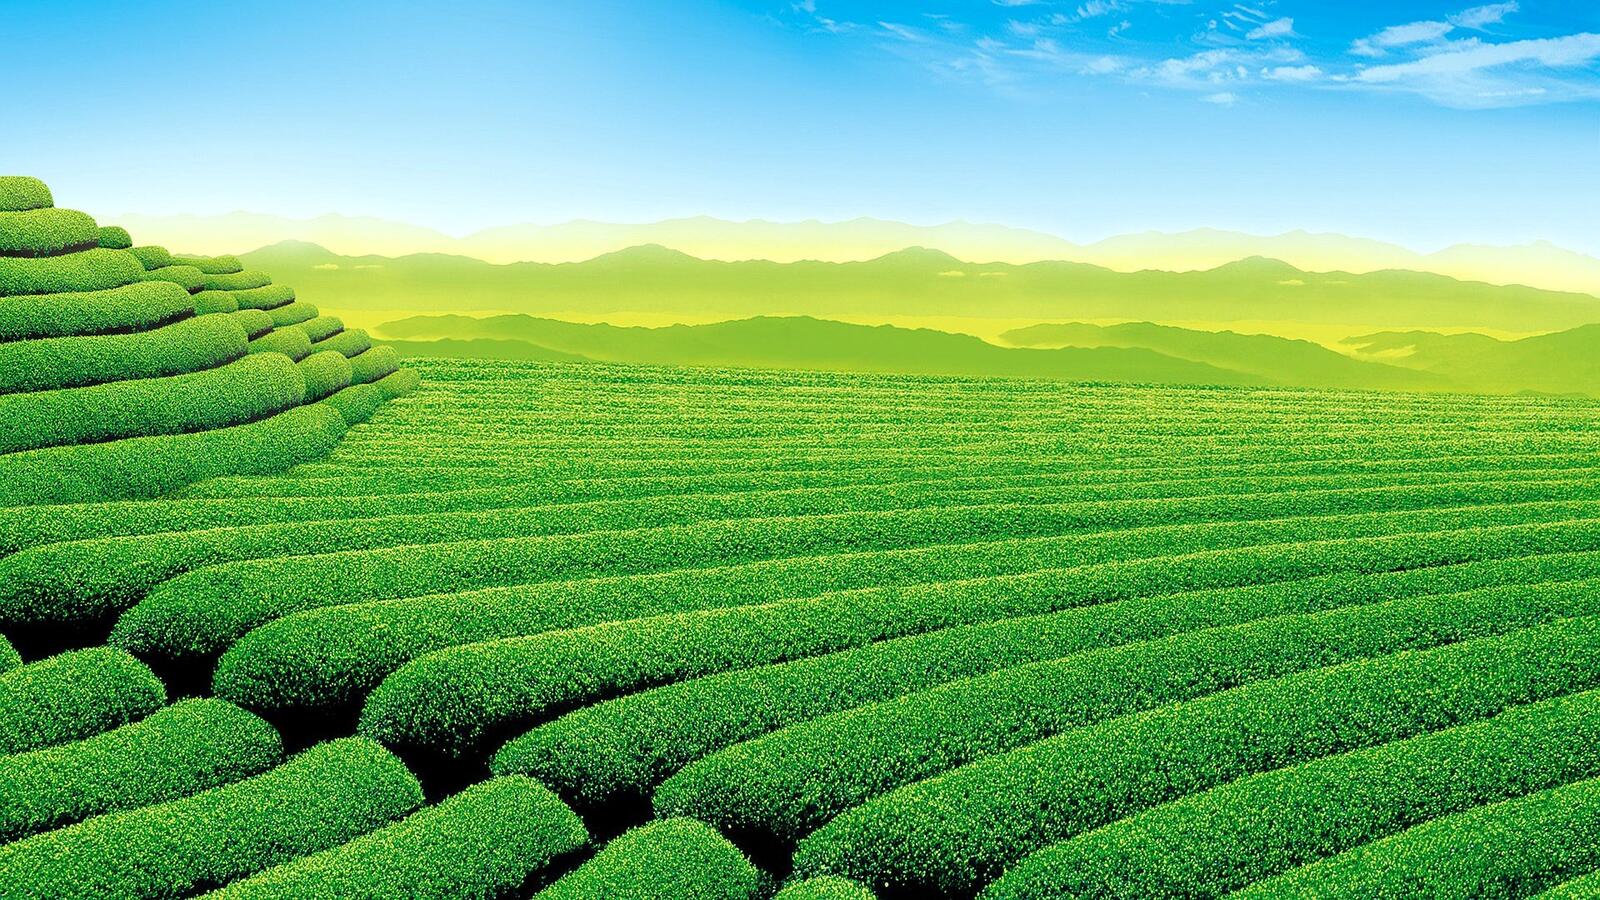 Free photo The green tea fields are beautiful